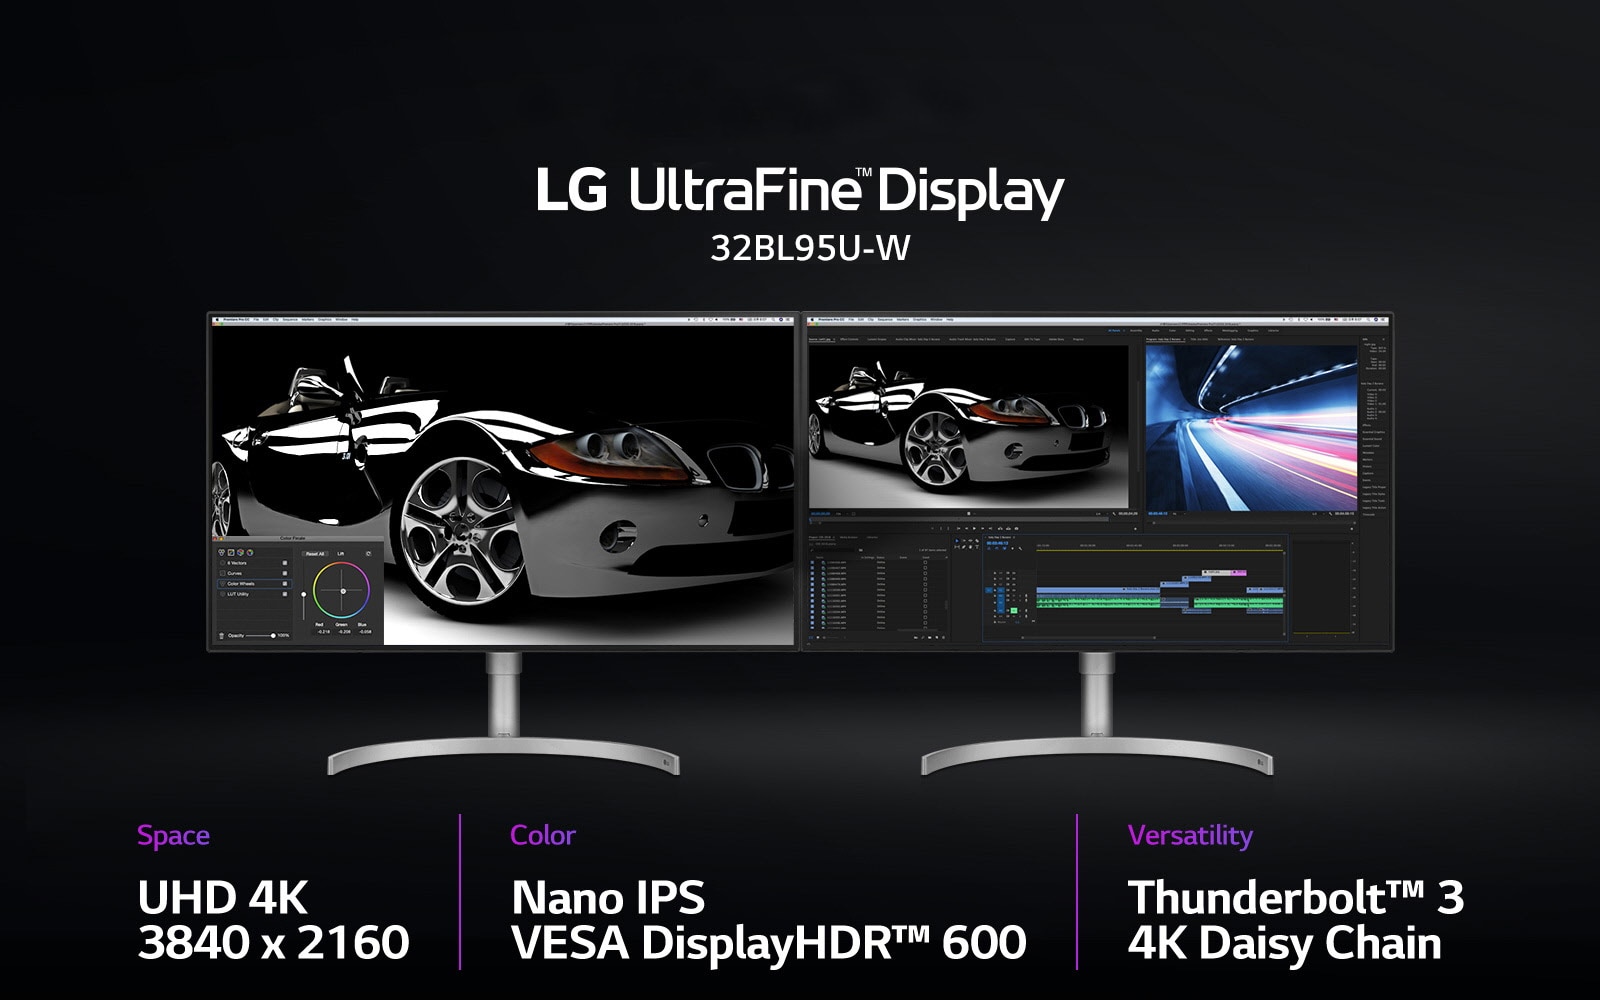 LG Ultrafine Display